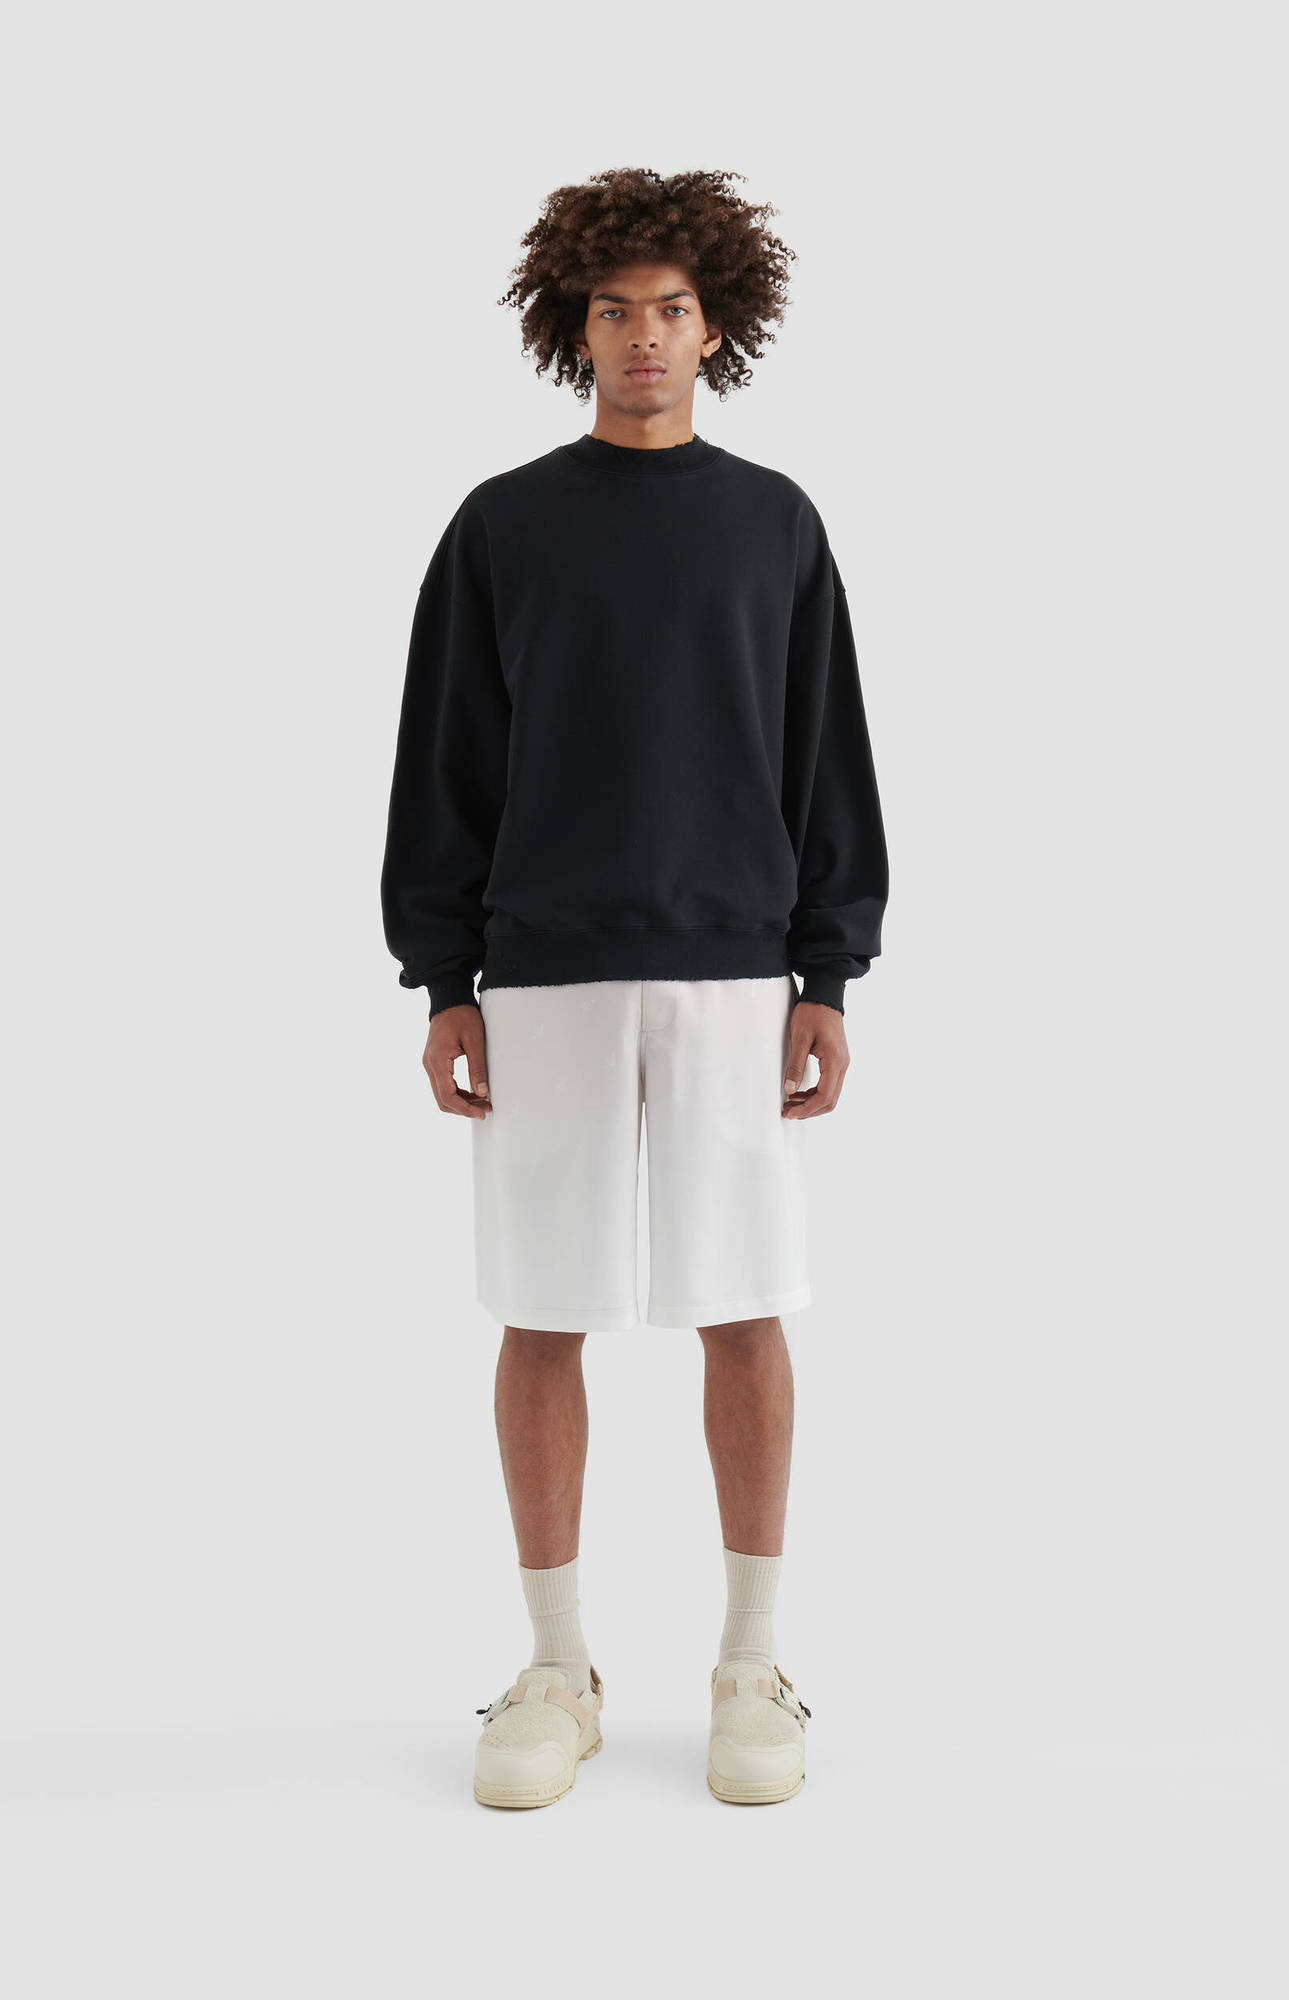 AXEL ARIGATO Vista Distressed Sweatshirt in Black XL